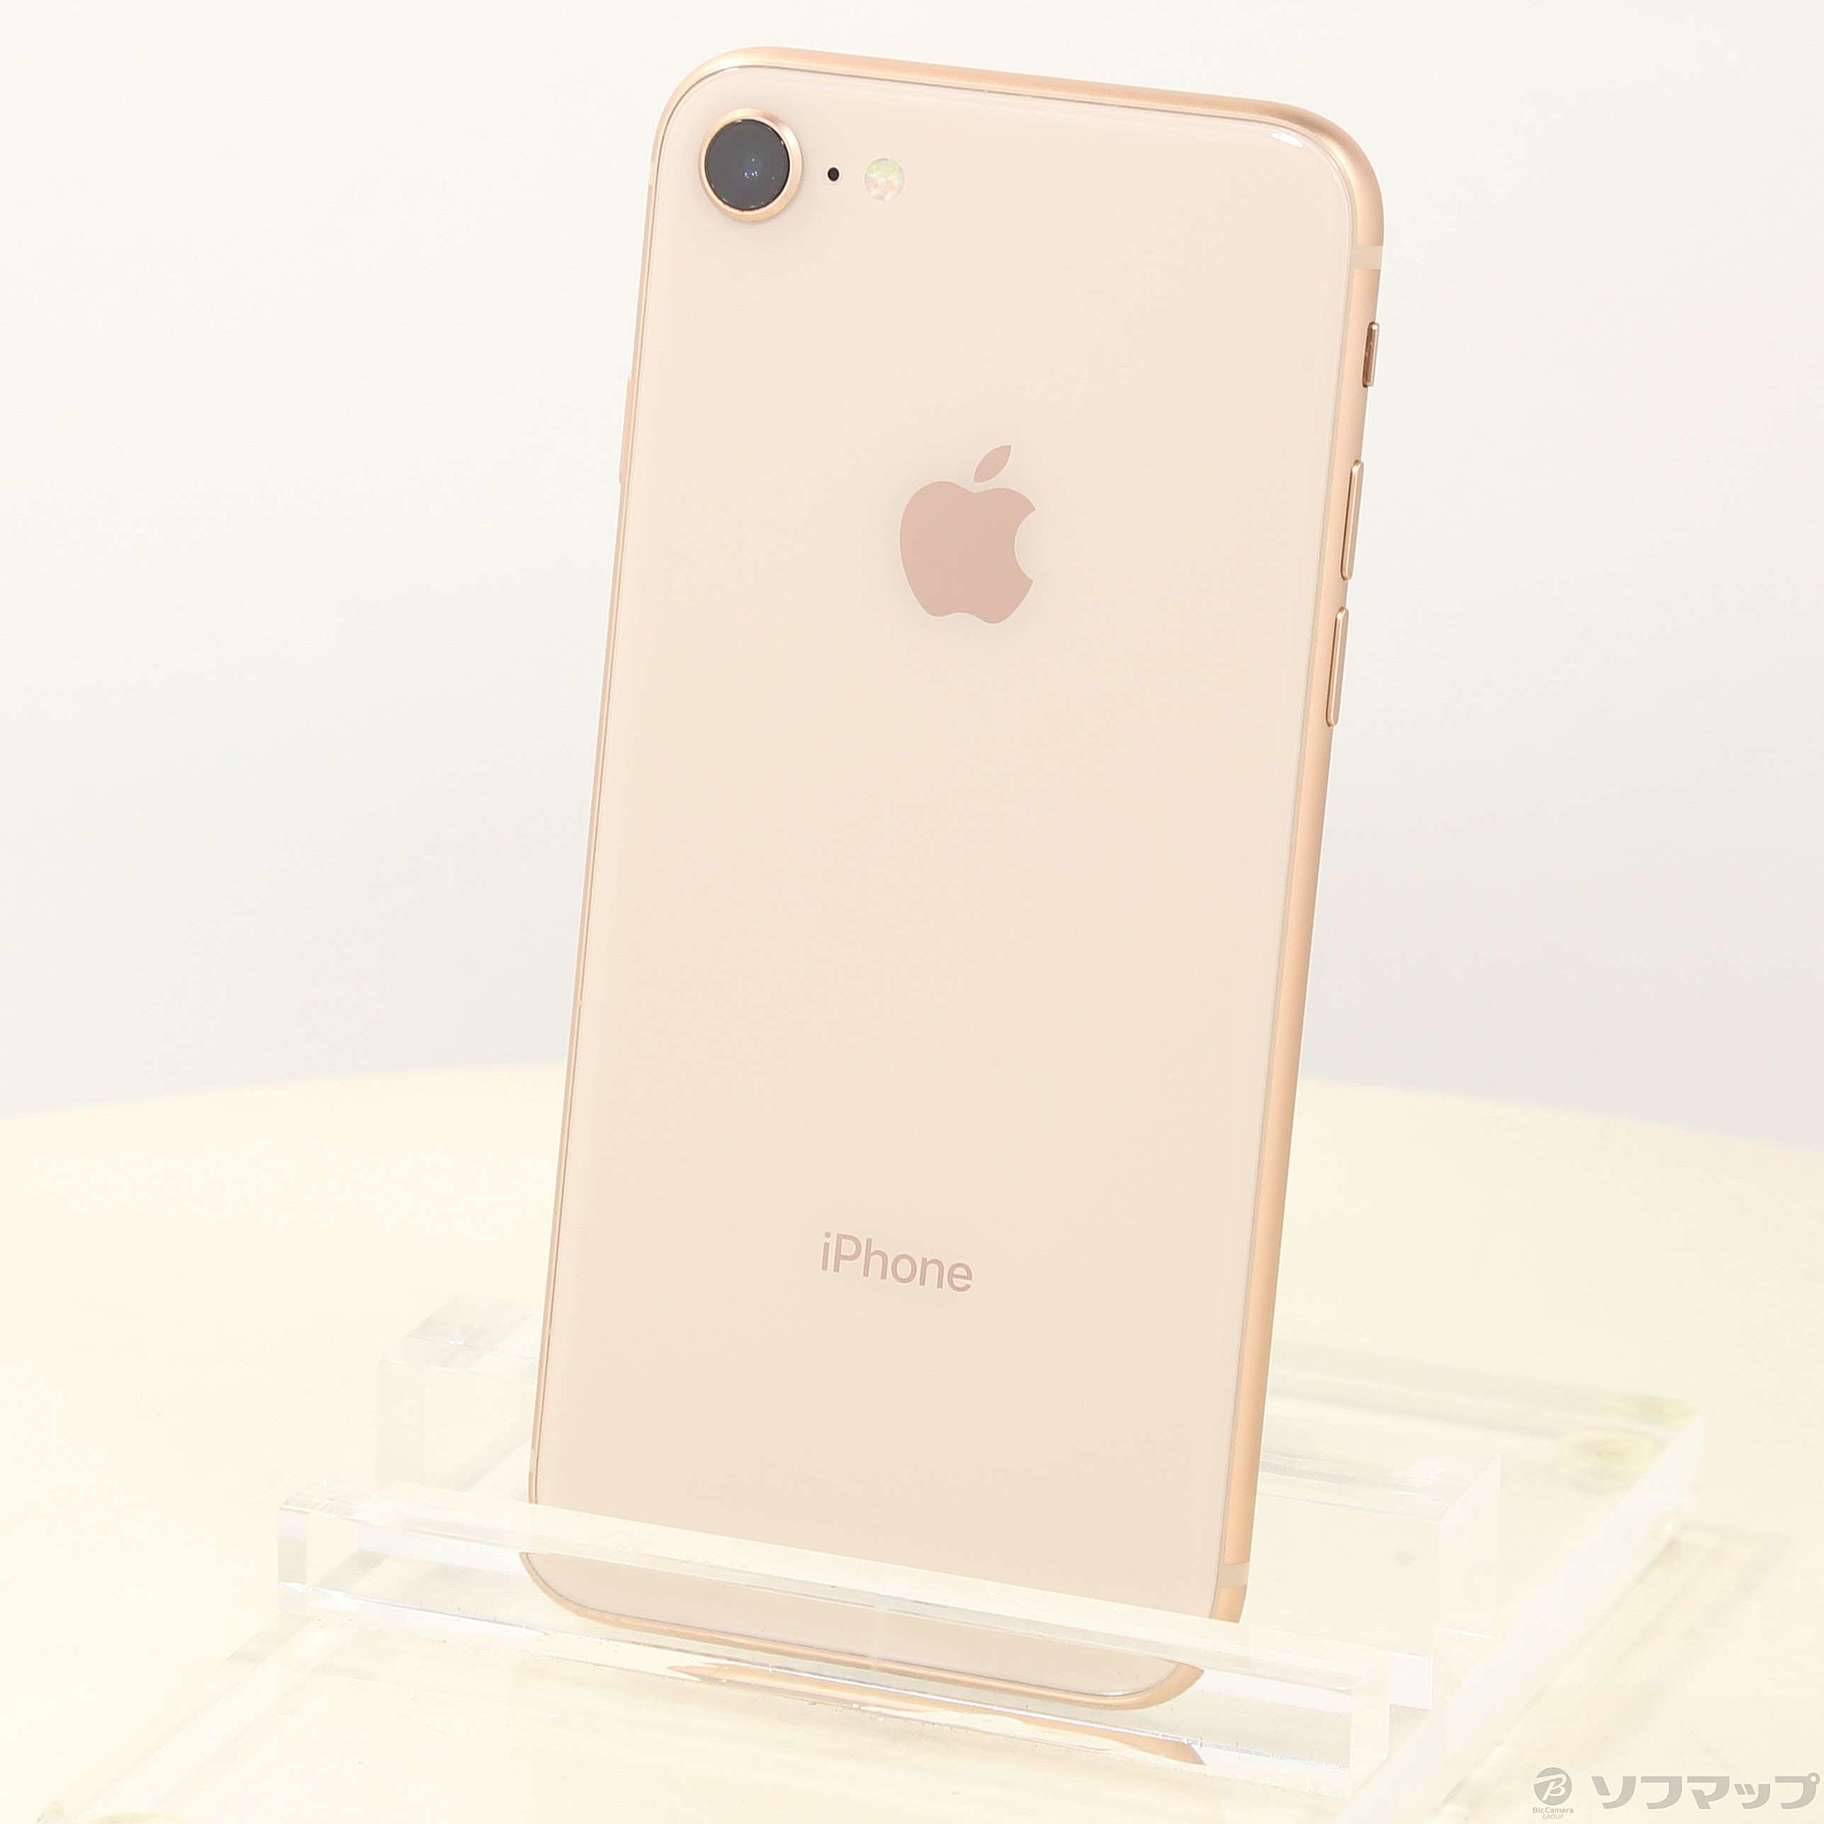 iPhone 8 ＊ Gold 256 GB SIMフリー ジャンク - スマートフォン本体